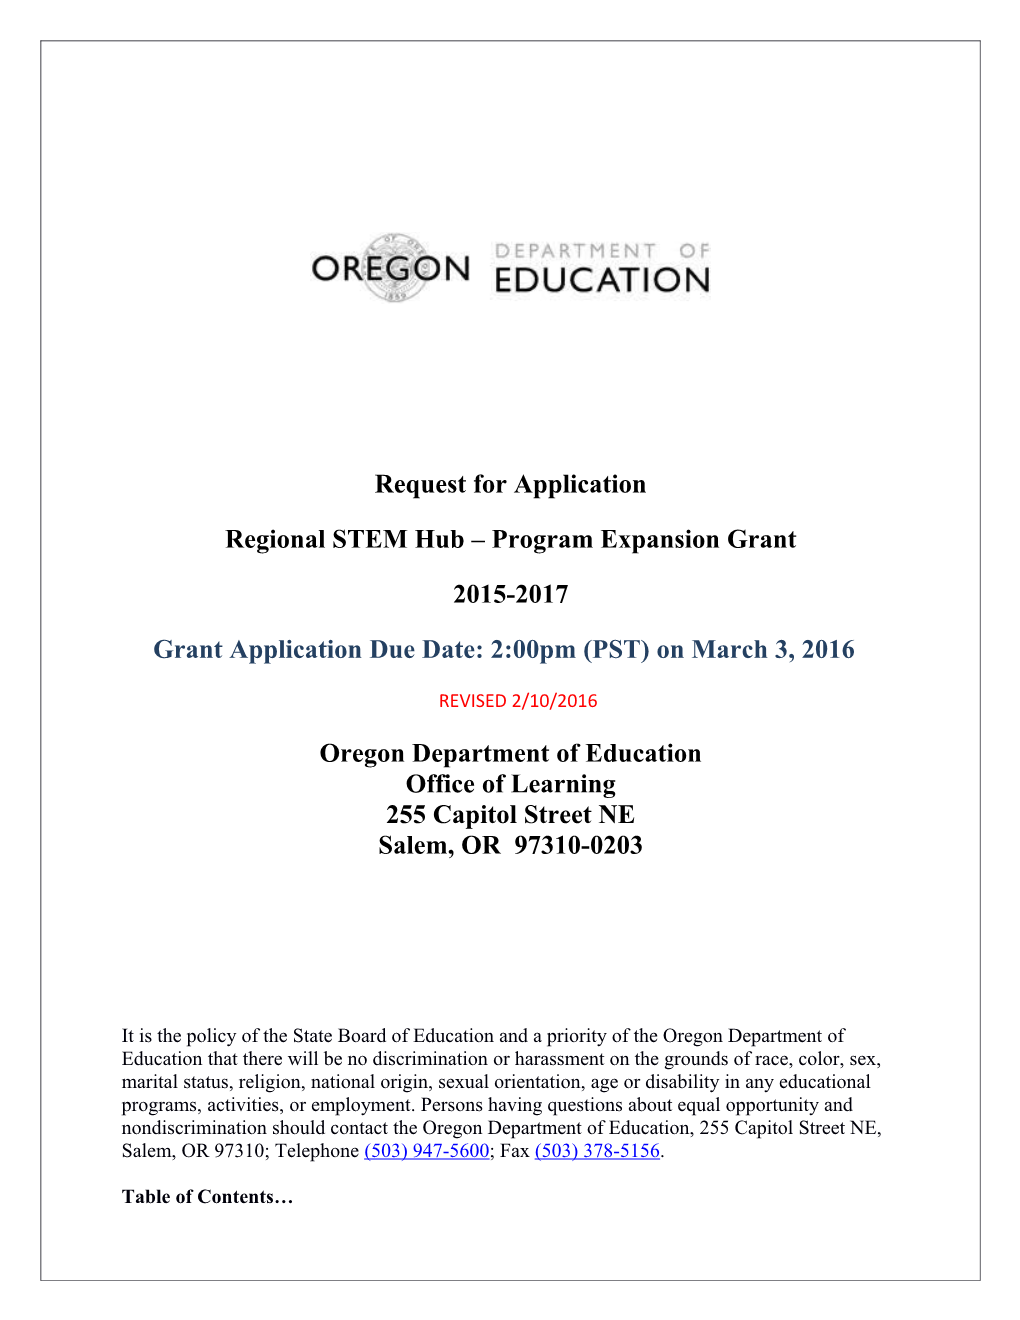 Regional STEM Hub Program Expansion Grant